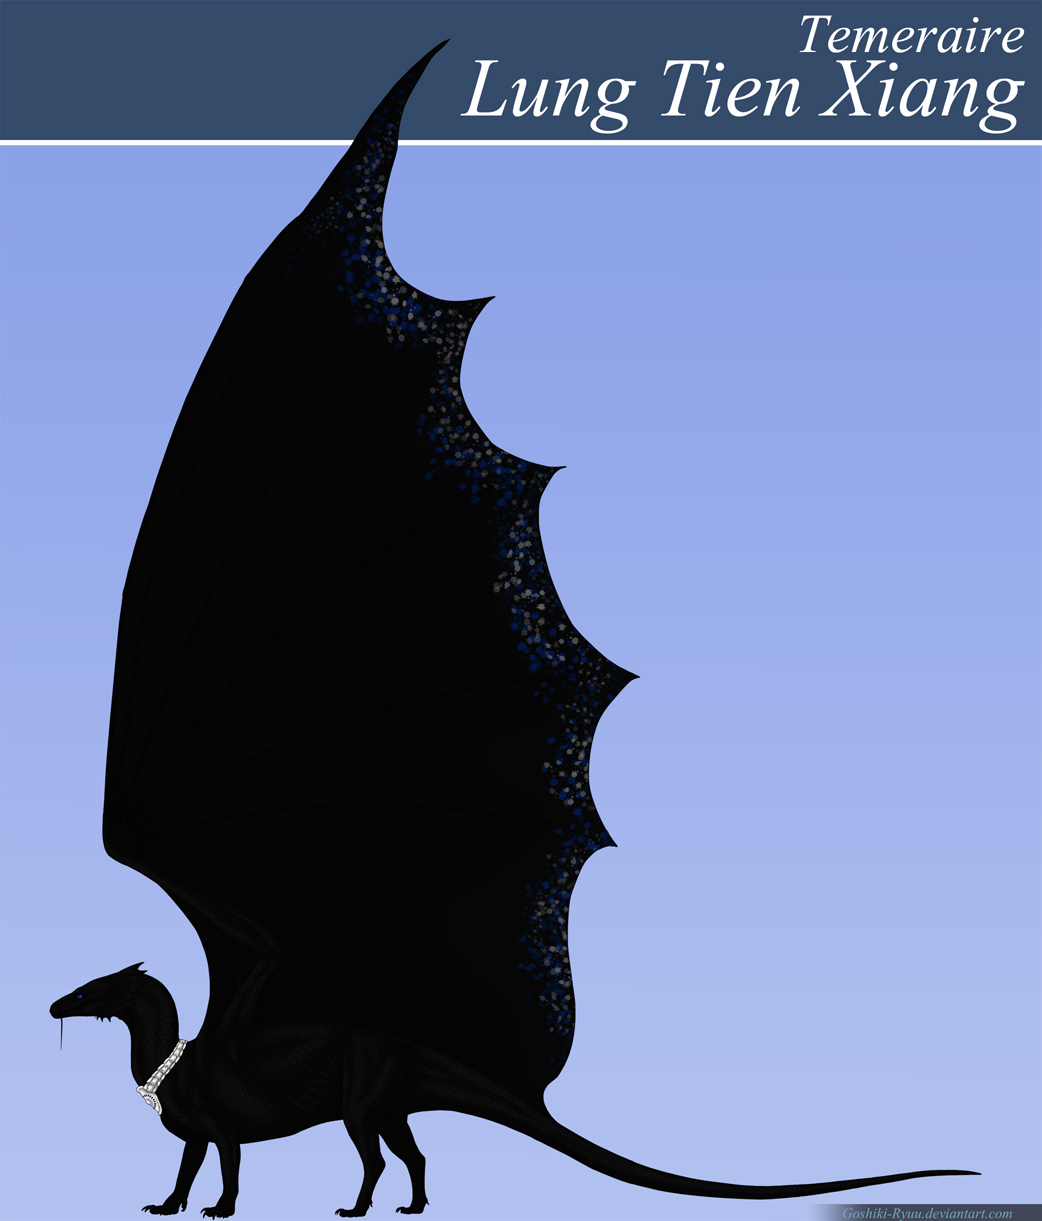 Datei:Lung Tien Xiang-Temeraire.jpg